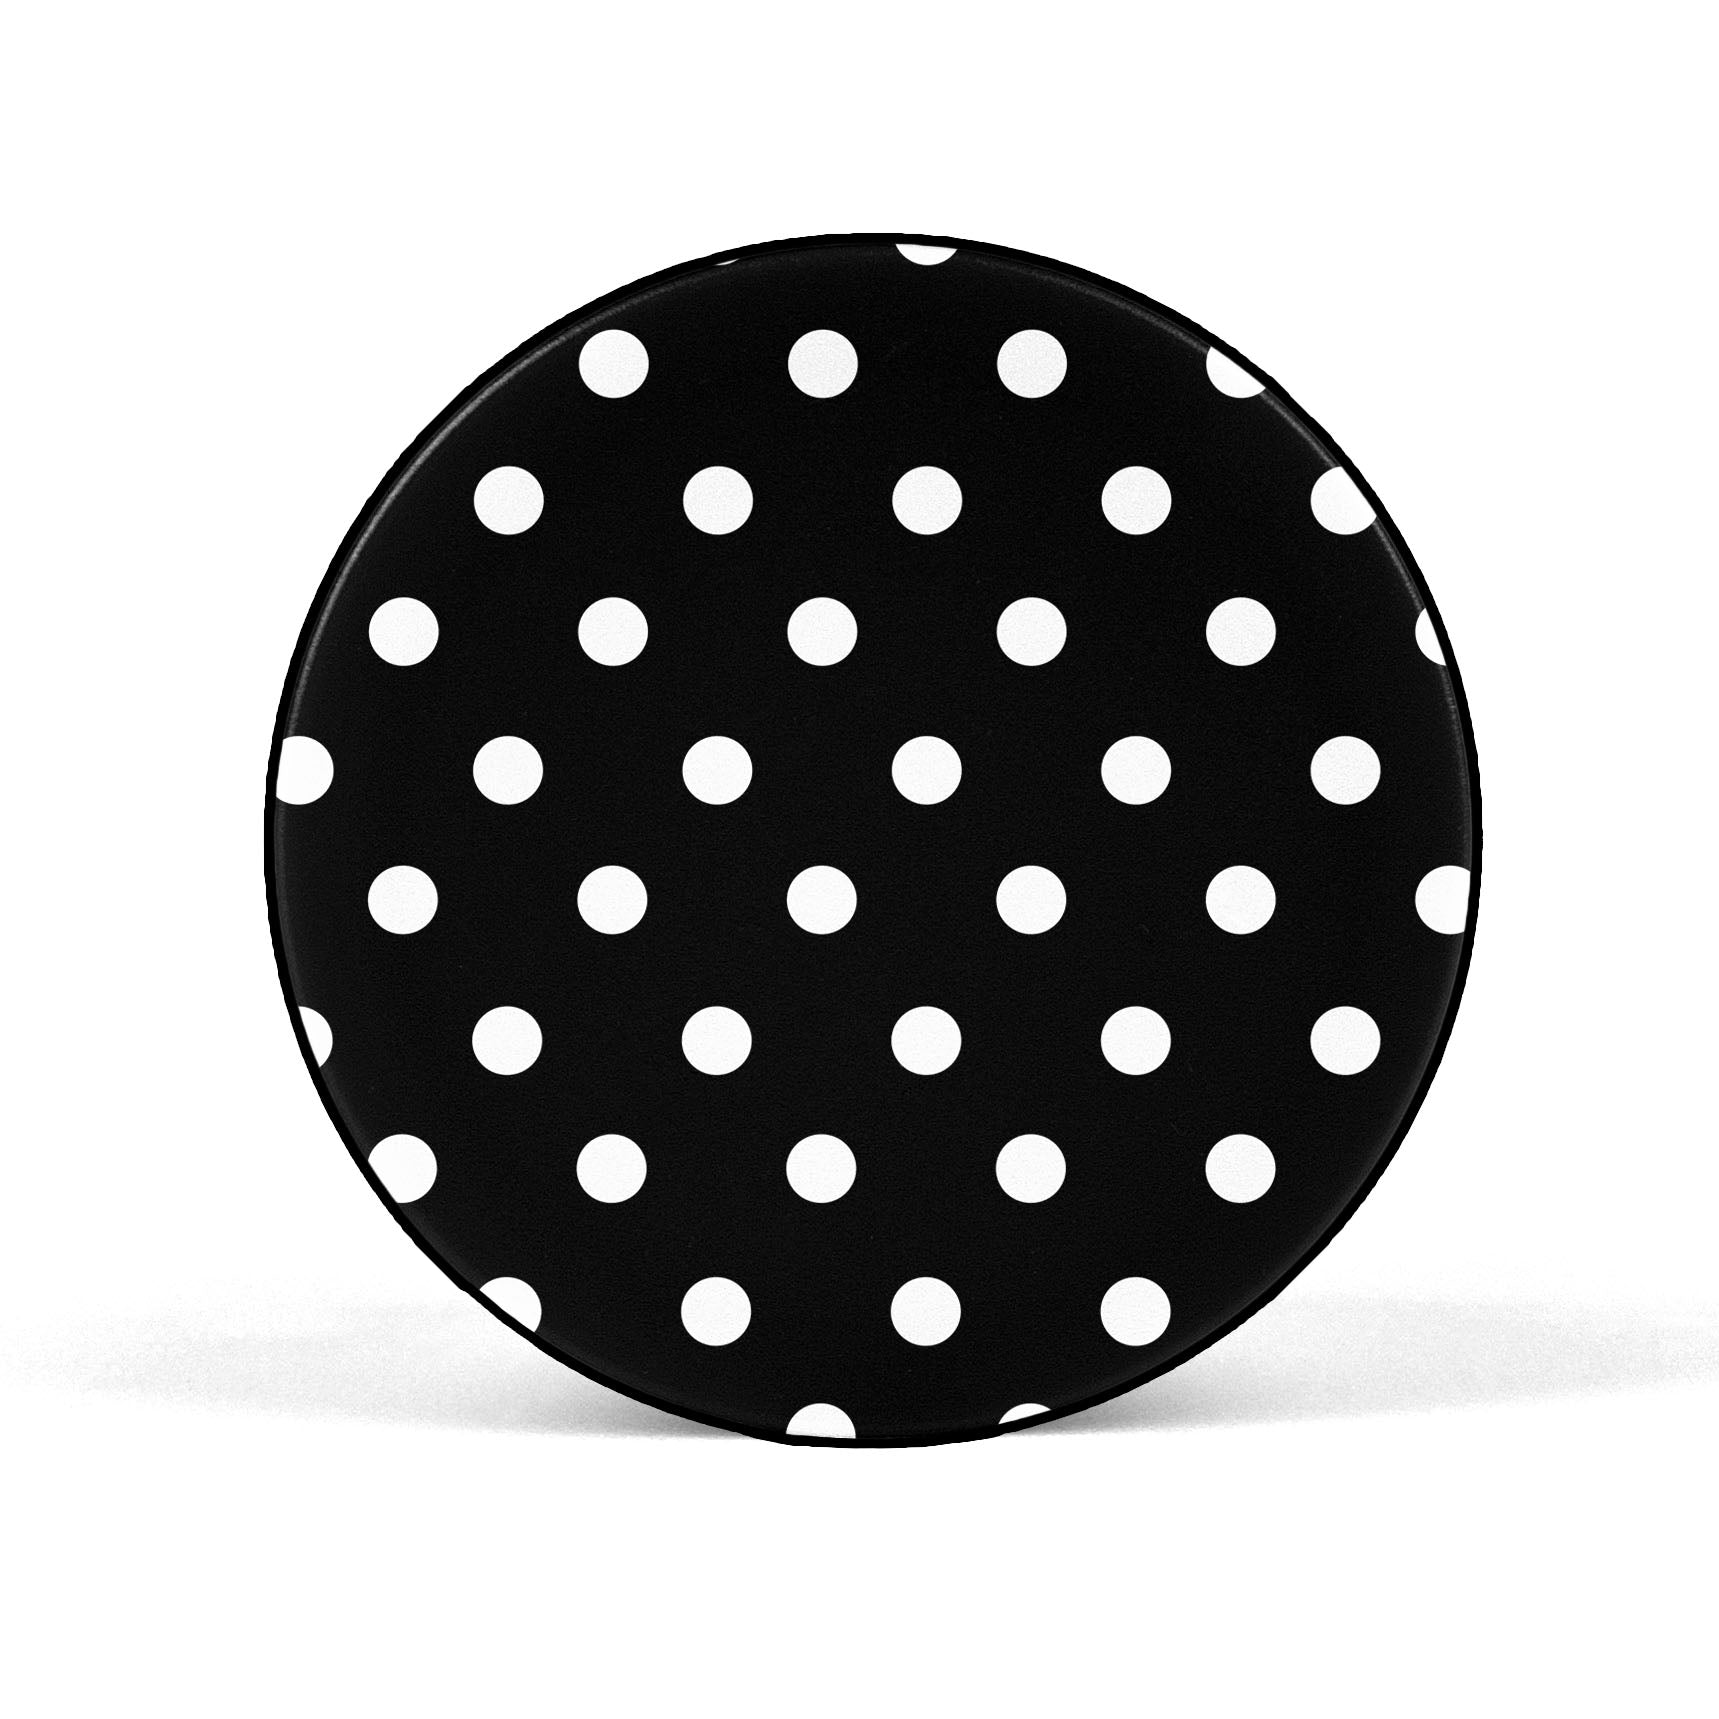 Black & White Polka Dots Mobile Phone Holder Grip - SCOTTSY